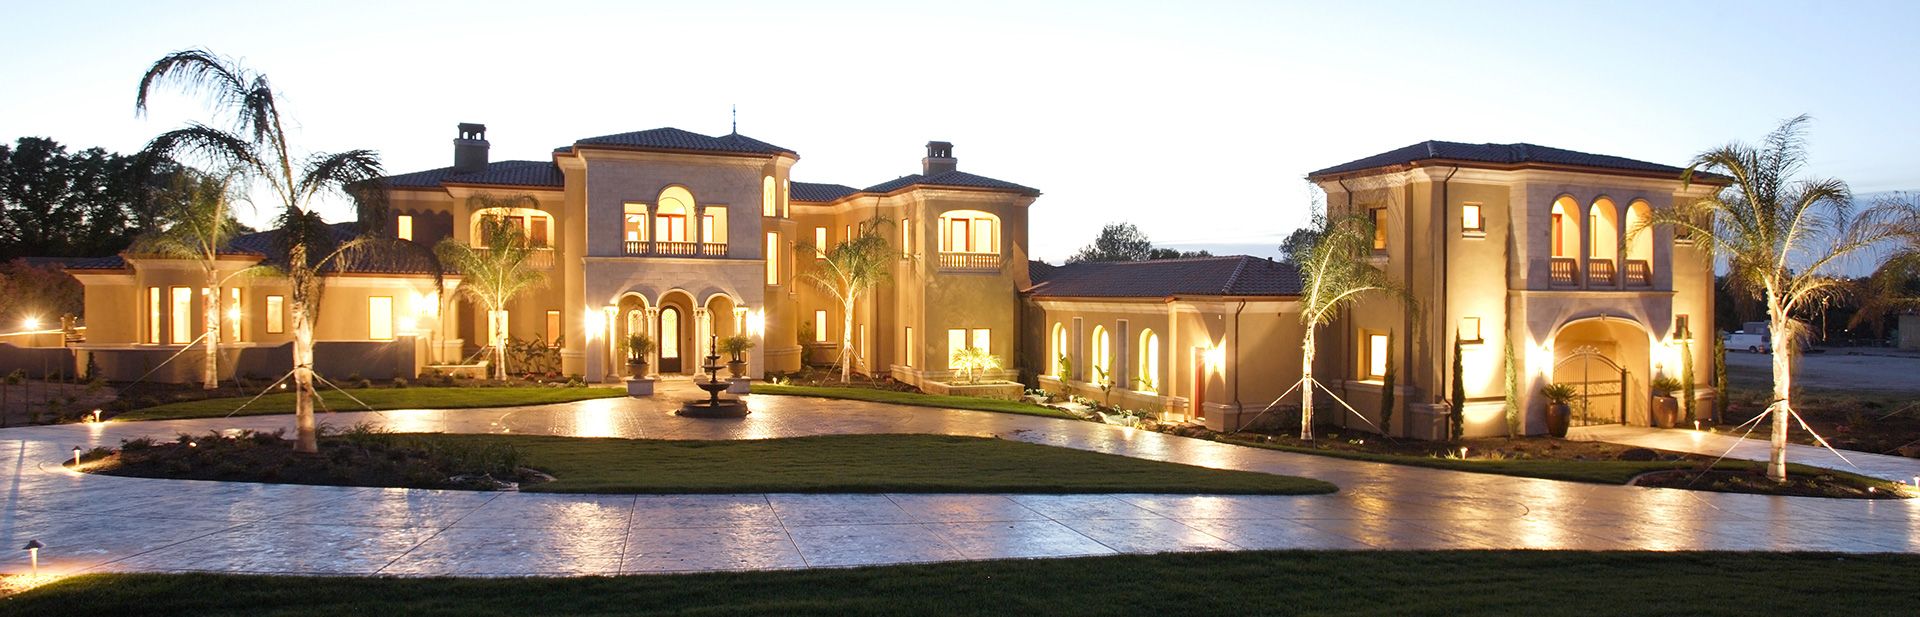 South Florida Luxury Real Estate -   Luxury Homes Exterior Ideas